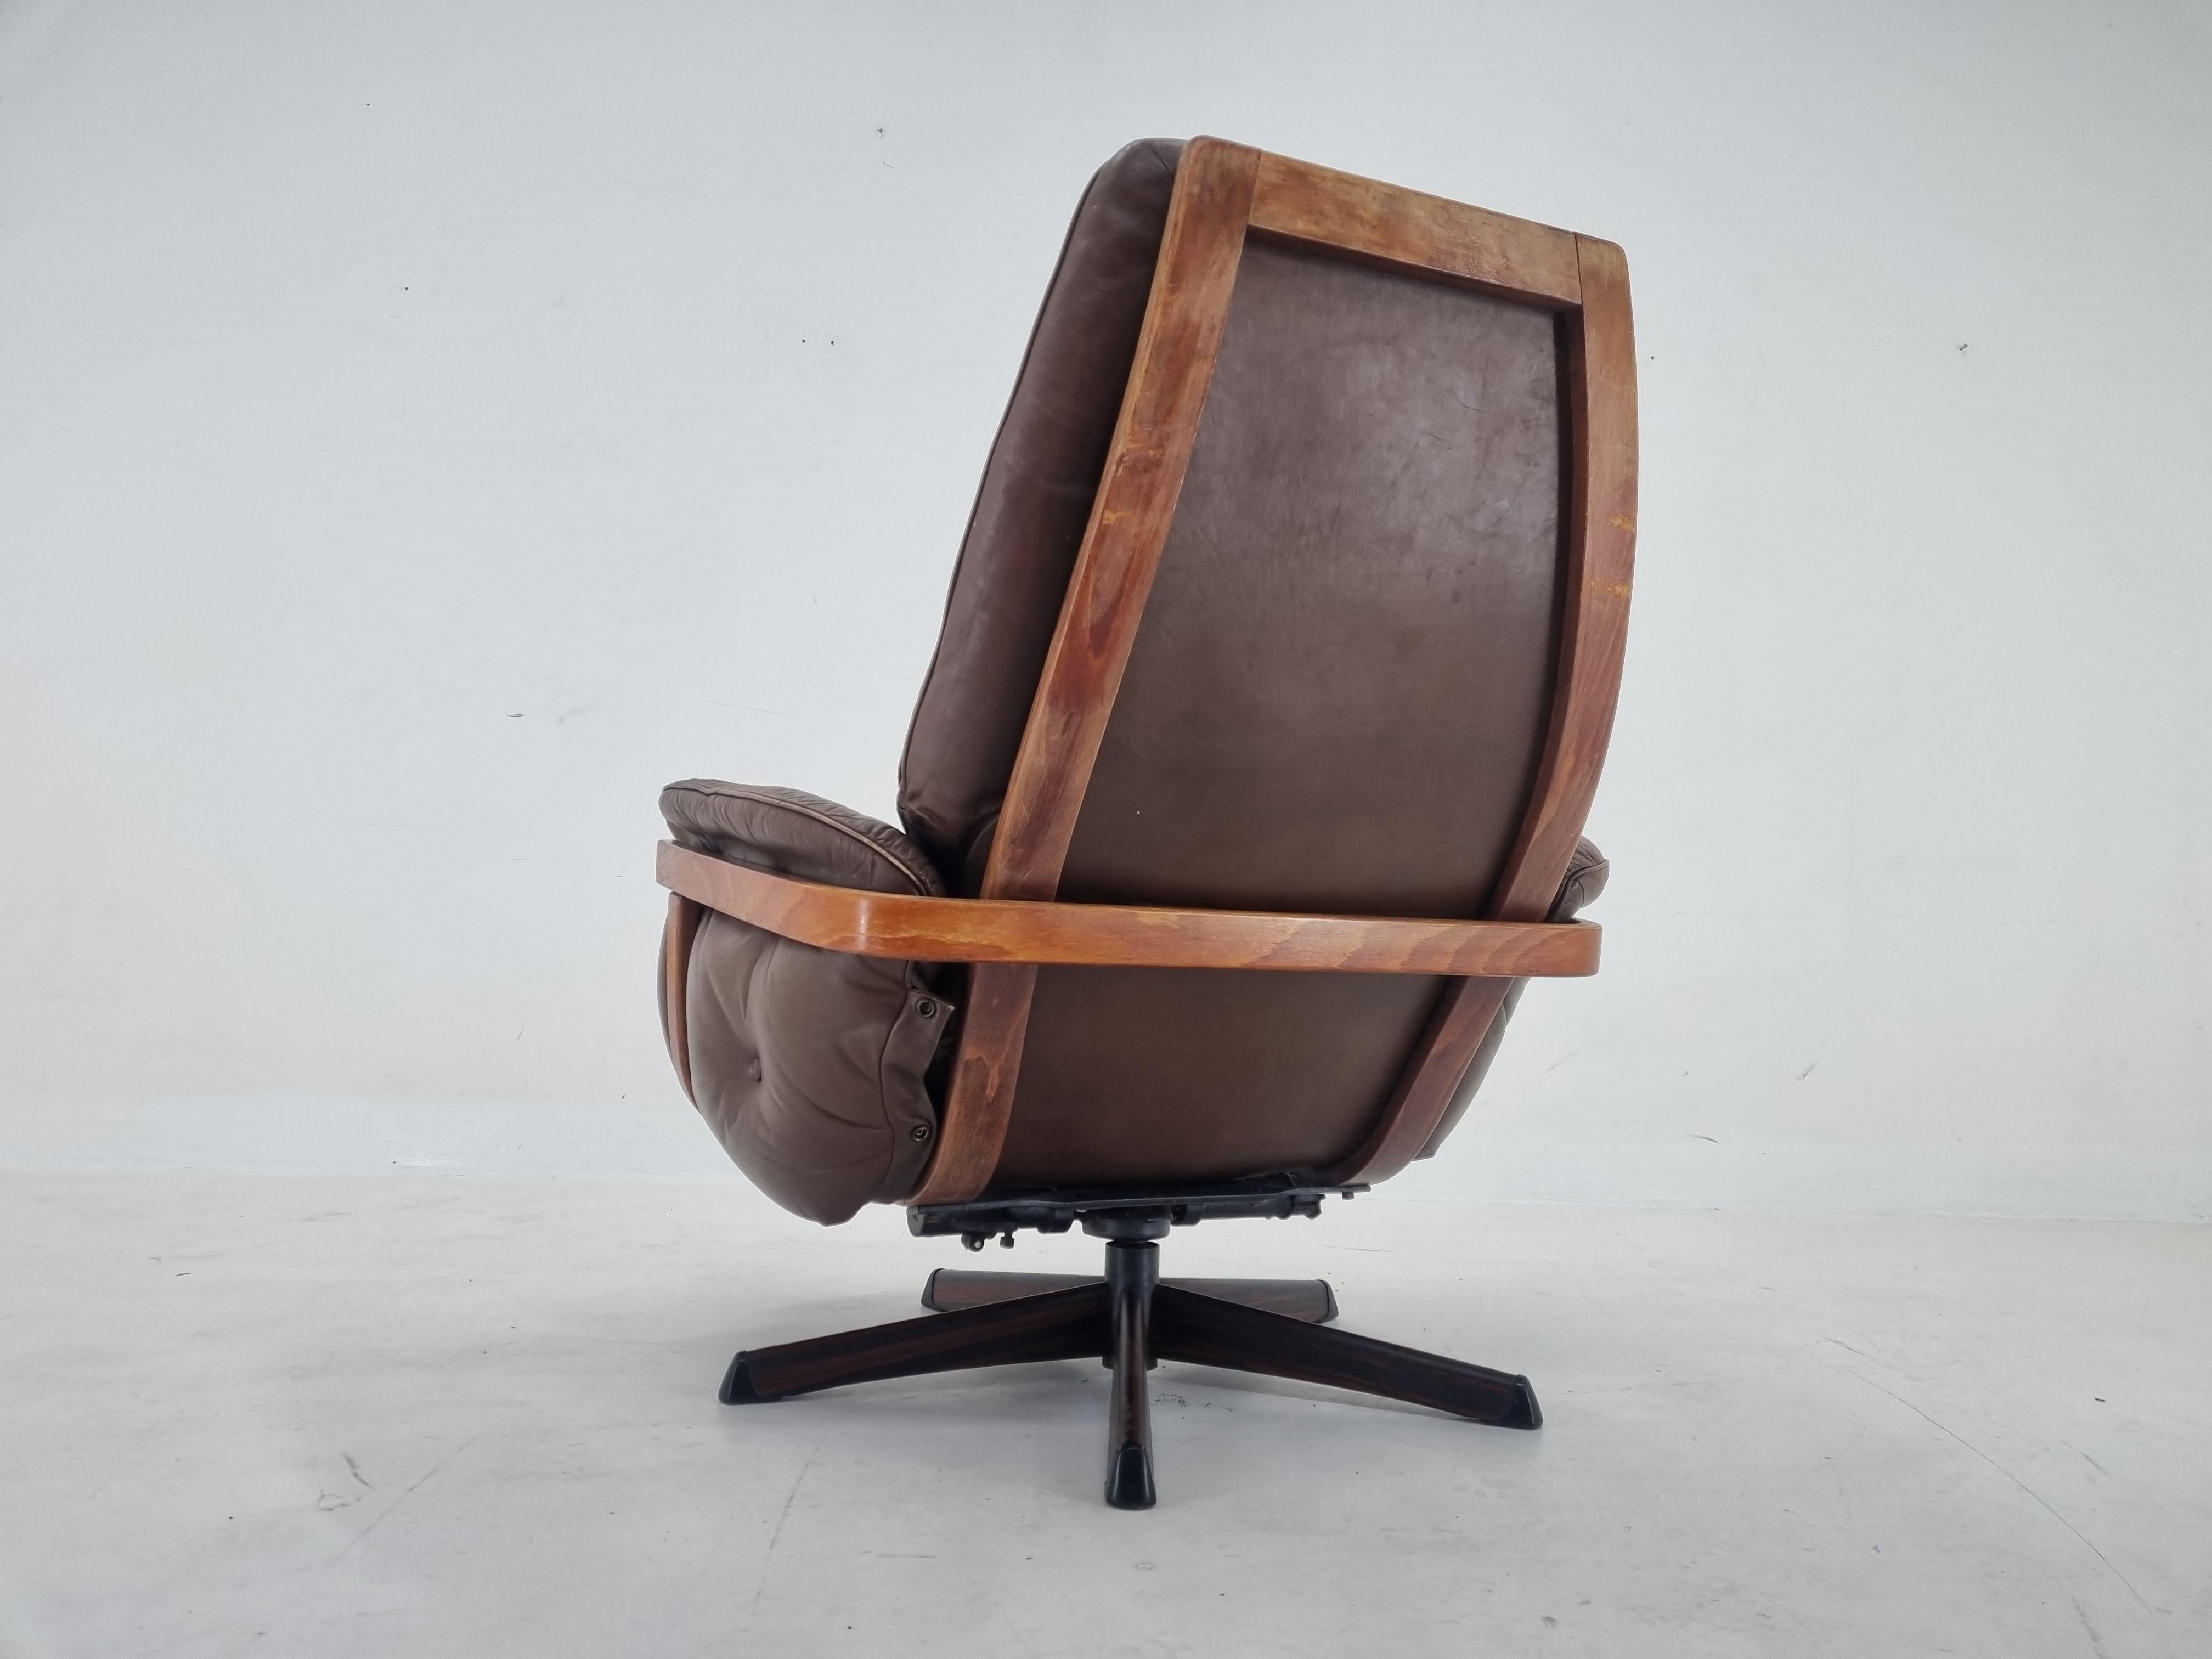 Swedish Midcentury Swivel Leather and Wood Armchair Göte Möbler Nässjö, Sweden, 1960s For Sale